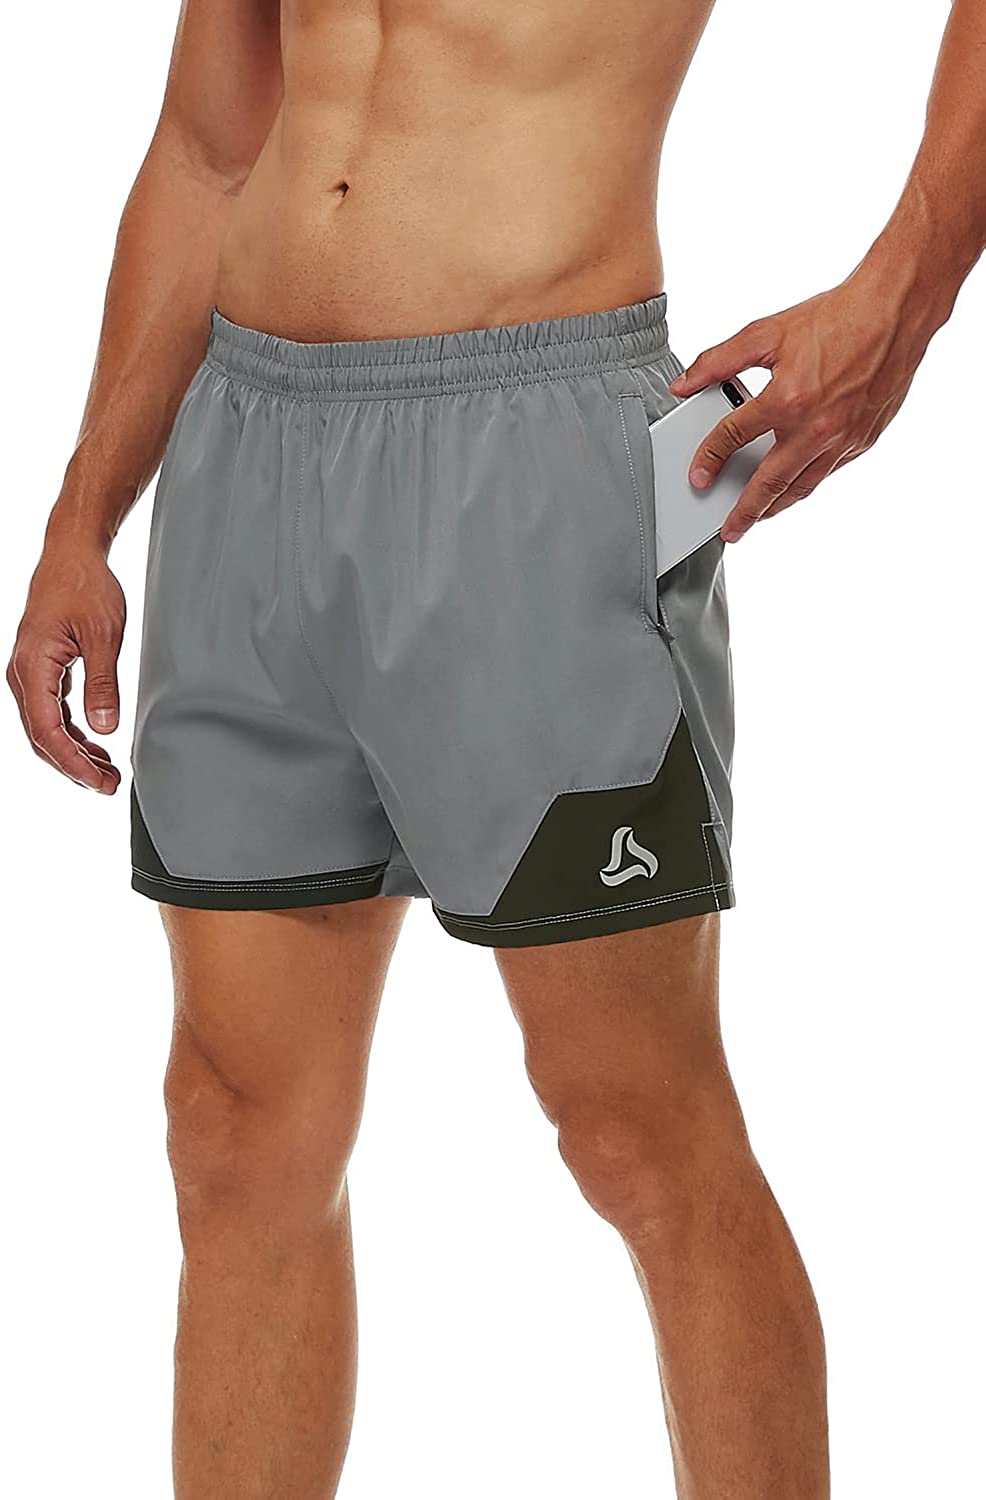 SILKWORLD Mens 7 Mesh Cool Dry Athletic Running Shorts with Zipper Pockets 